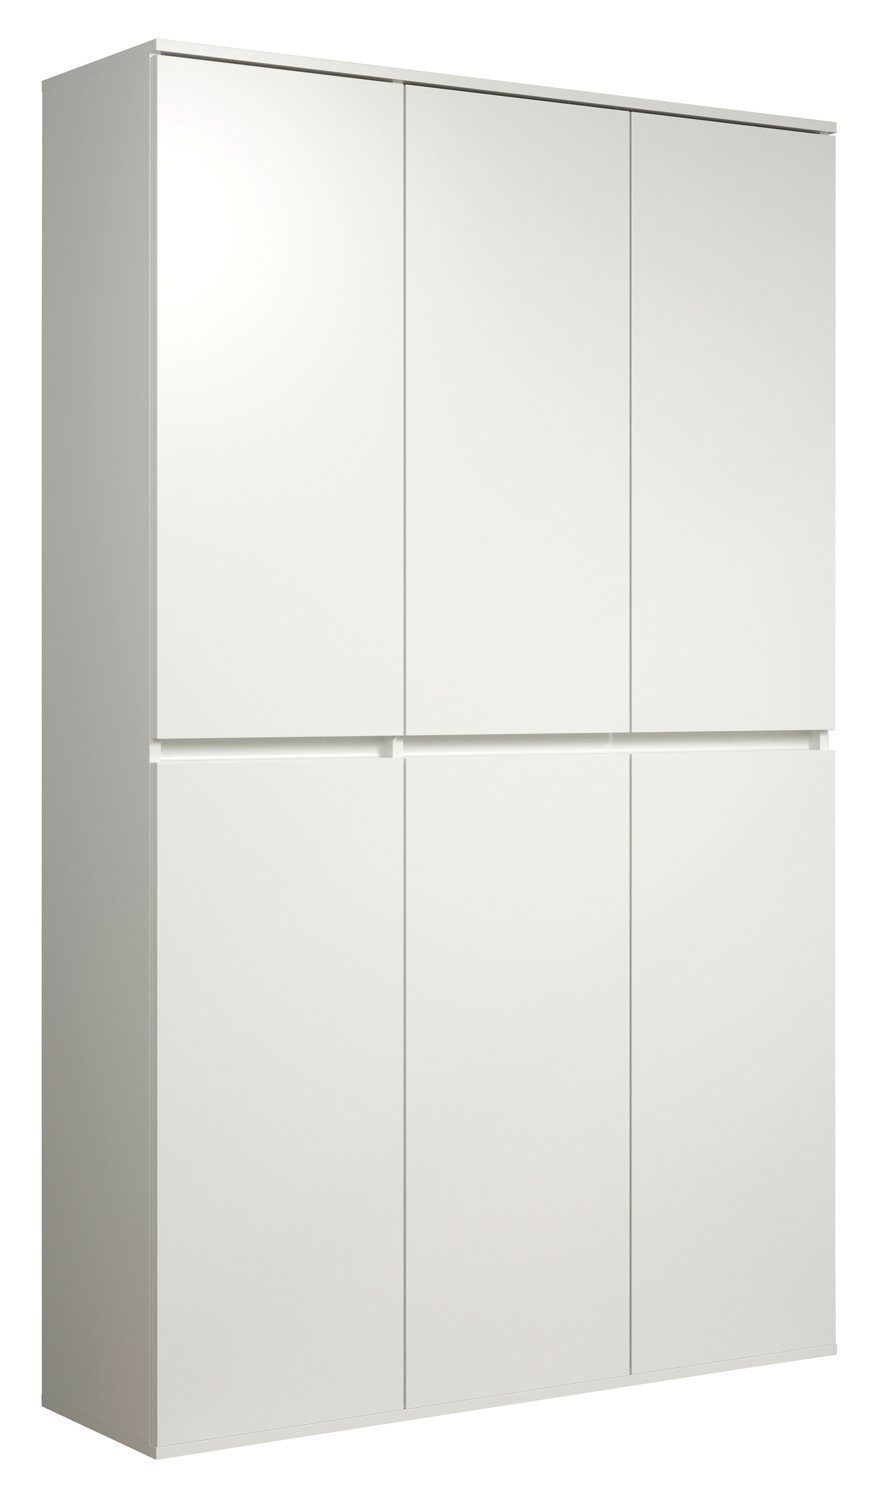 Mehrzweckschrank NEVADA, B 111 cm x H 191 cm, Weiß, 6 Двери